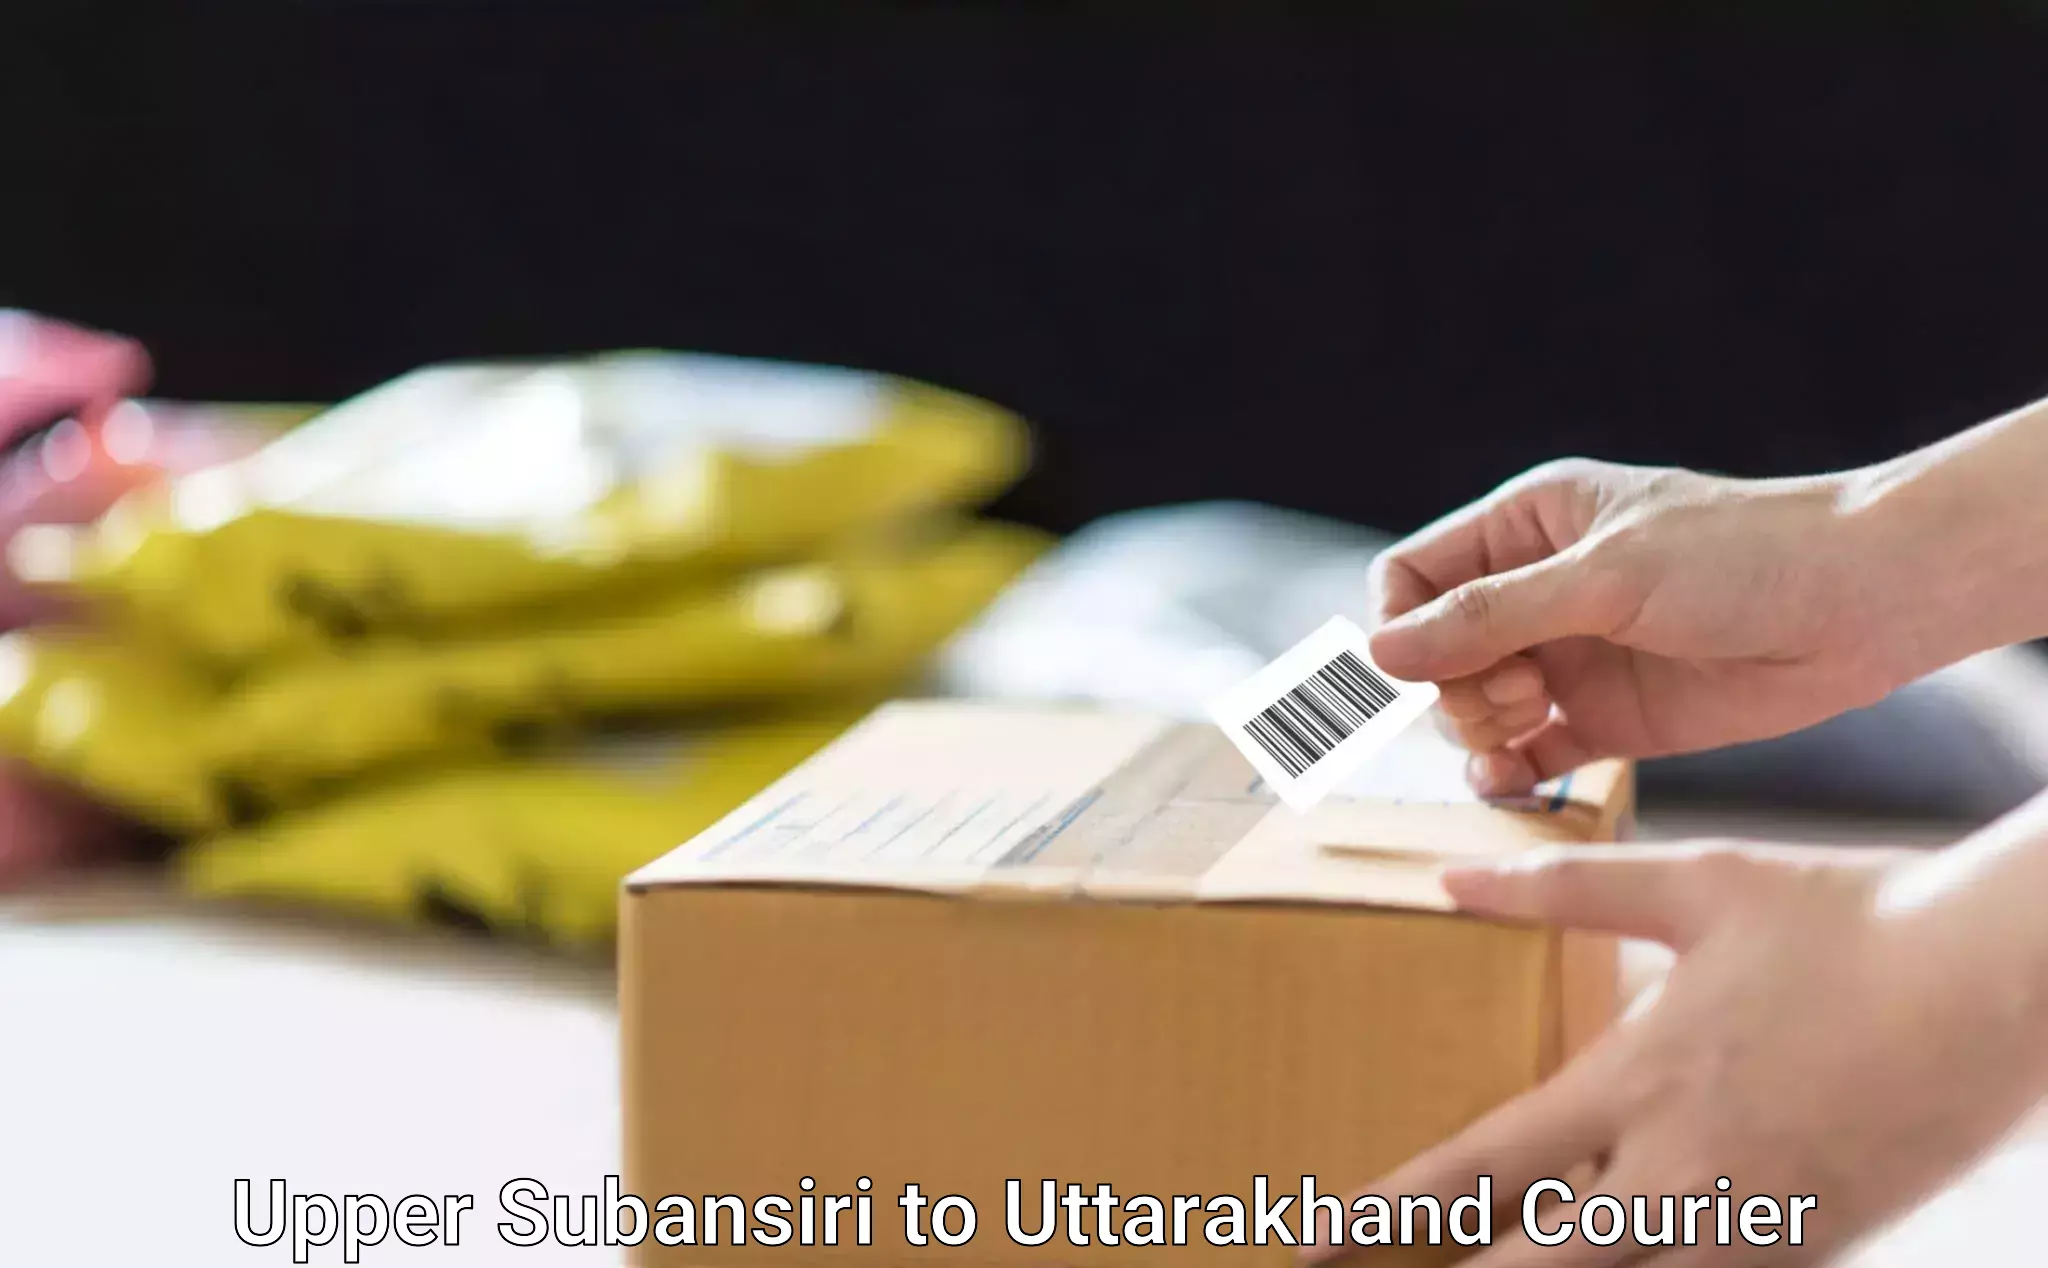 State-of-the-art courier technology Upper Subansiri to Rishikesh